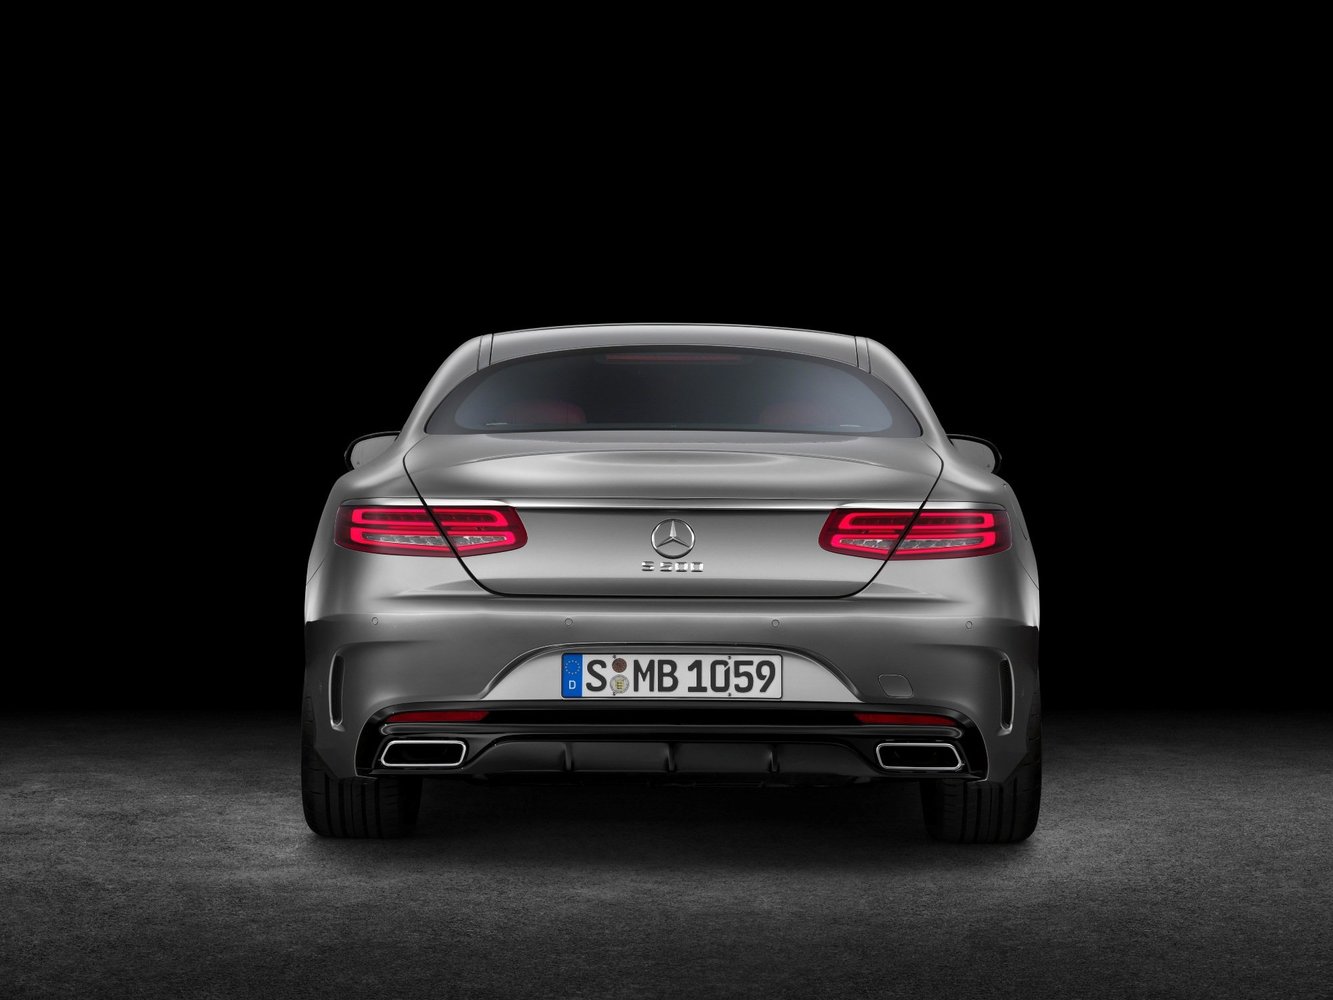 купе Mercedes-Benz S-klasse 2013 - 2016г выпуска модификация 4.7 AT (455 л.с.)